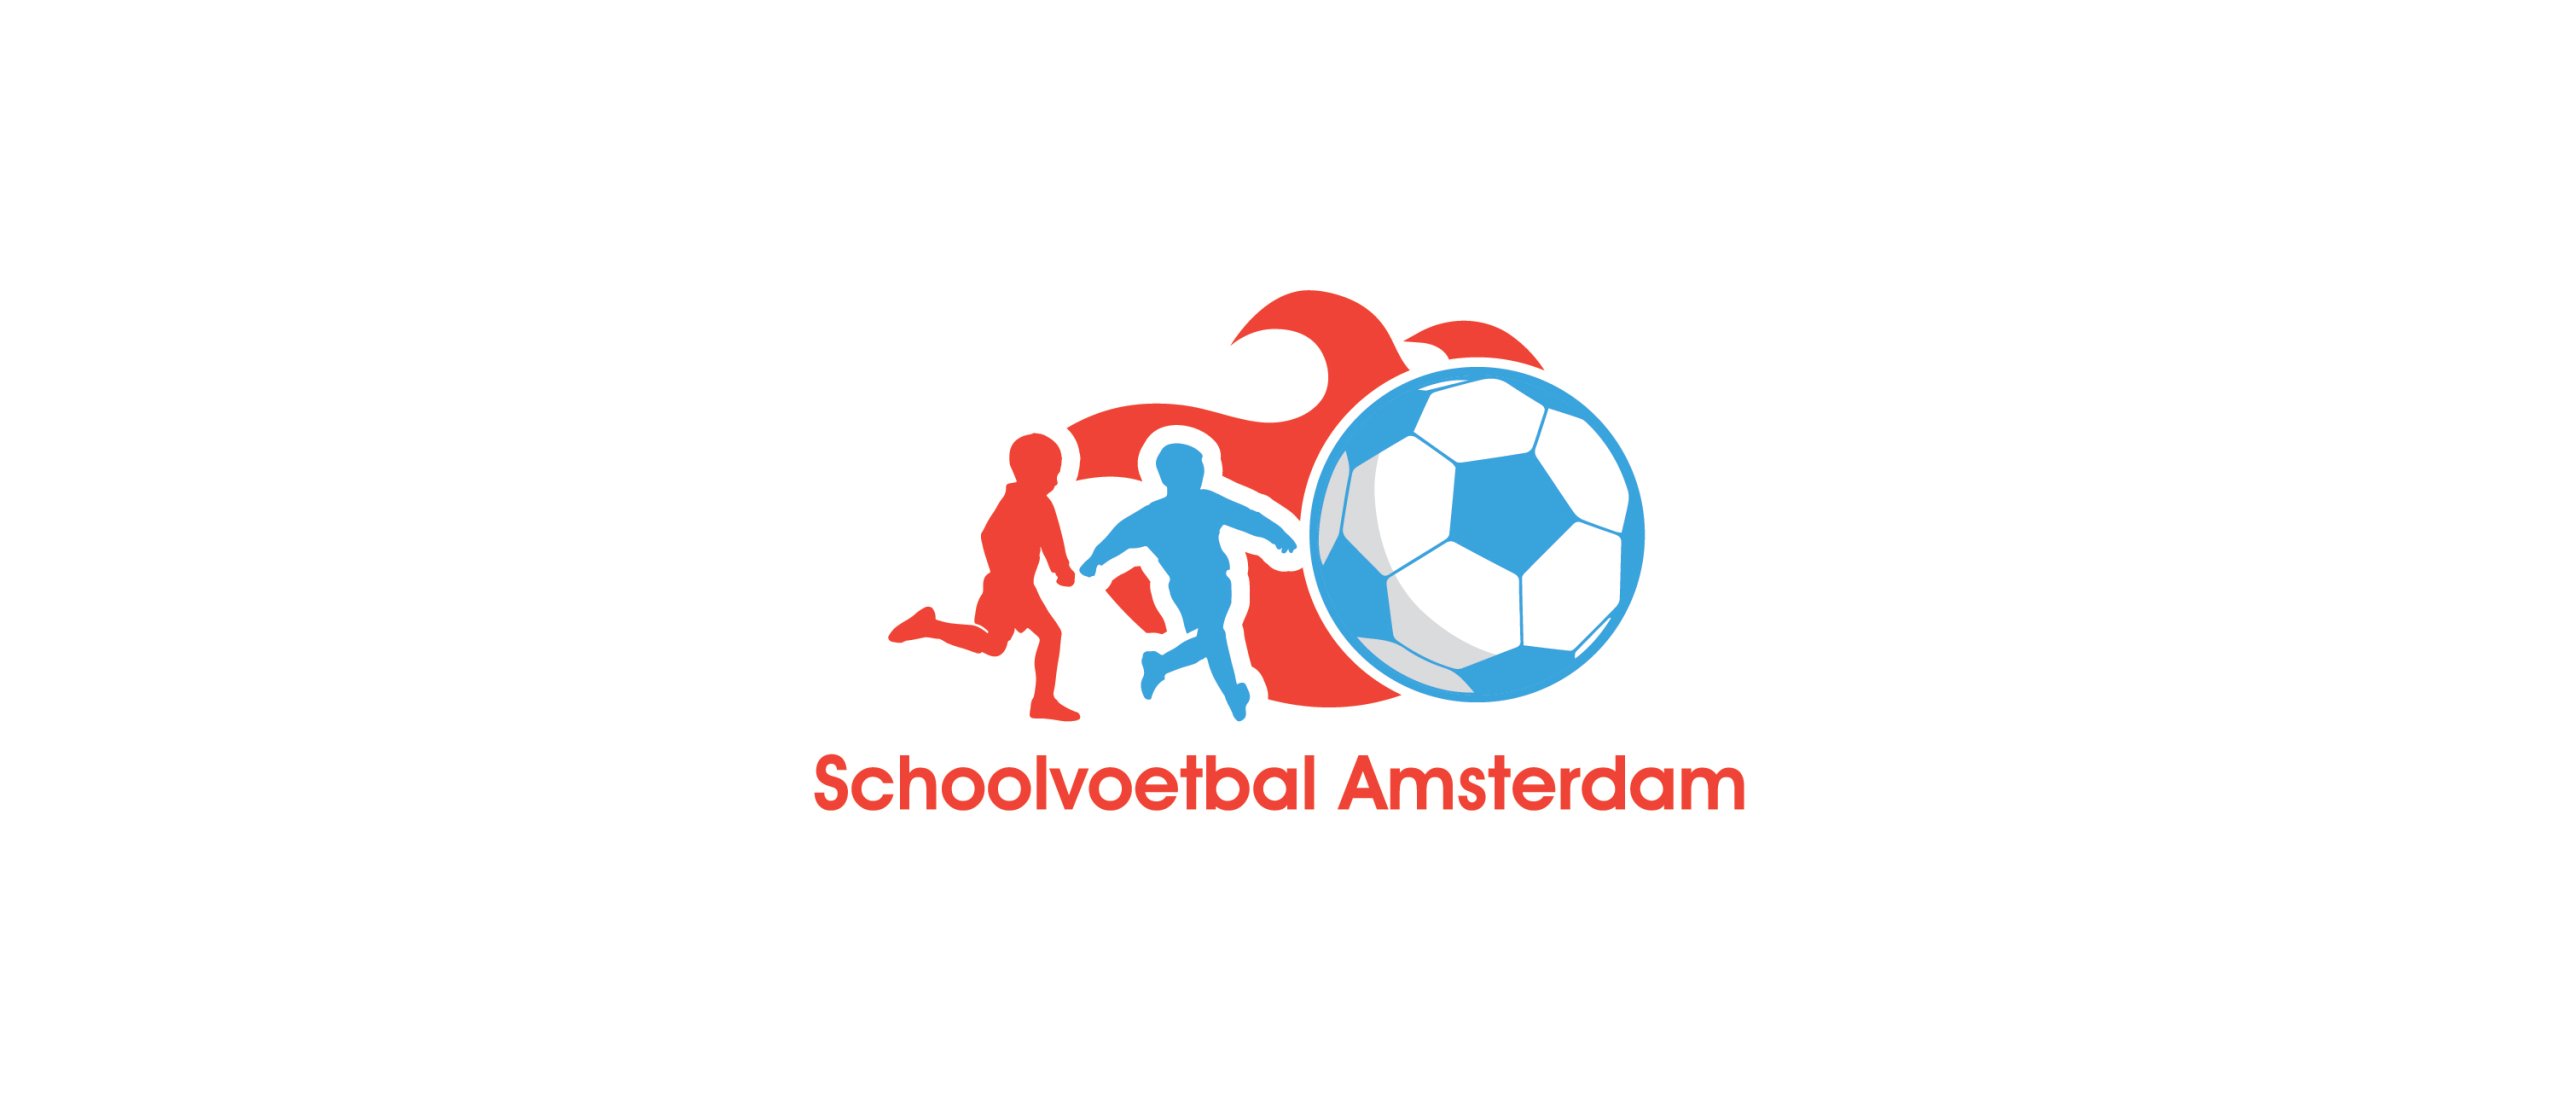 Finale Amsterdam wordt districtsfinale KNVB